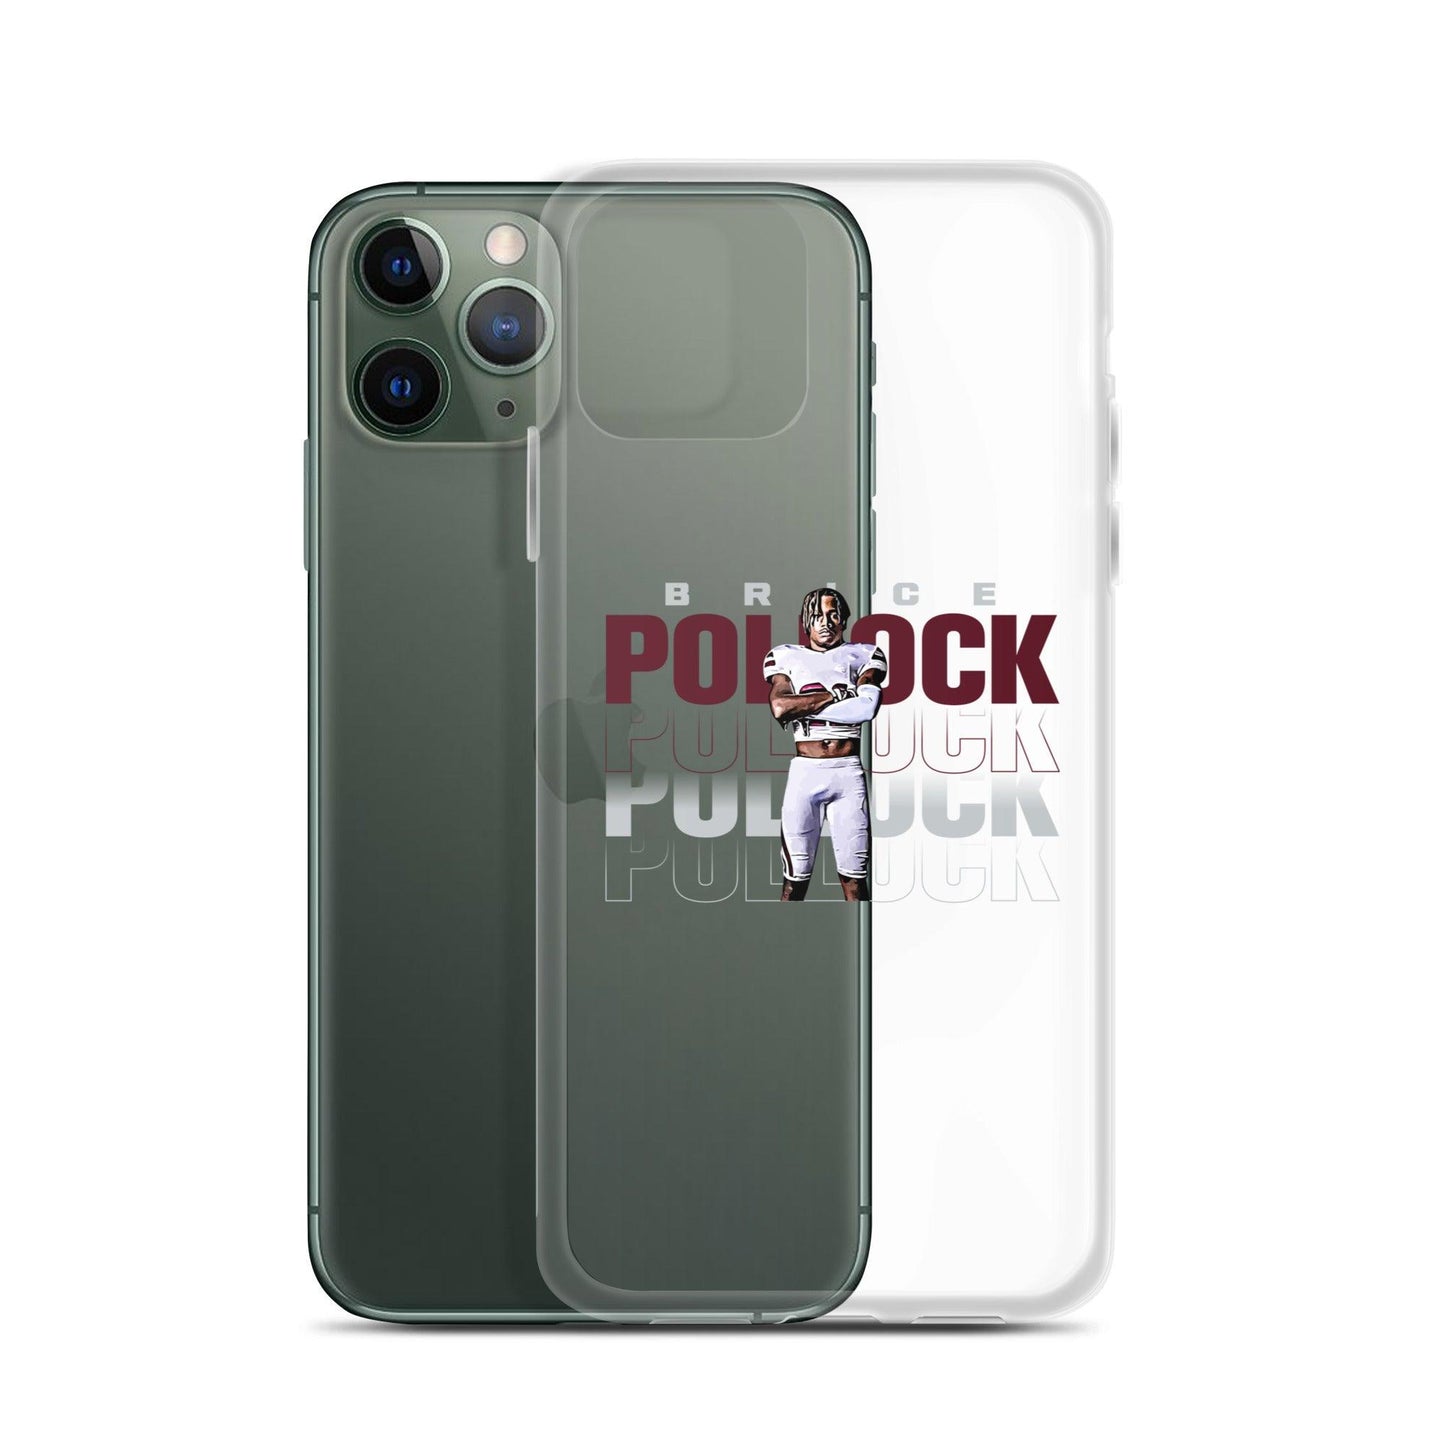 Brice Pollock "Gameday" iPhone Case - Fan Arch